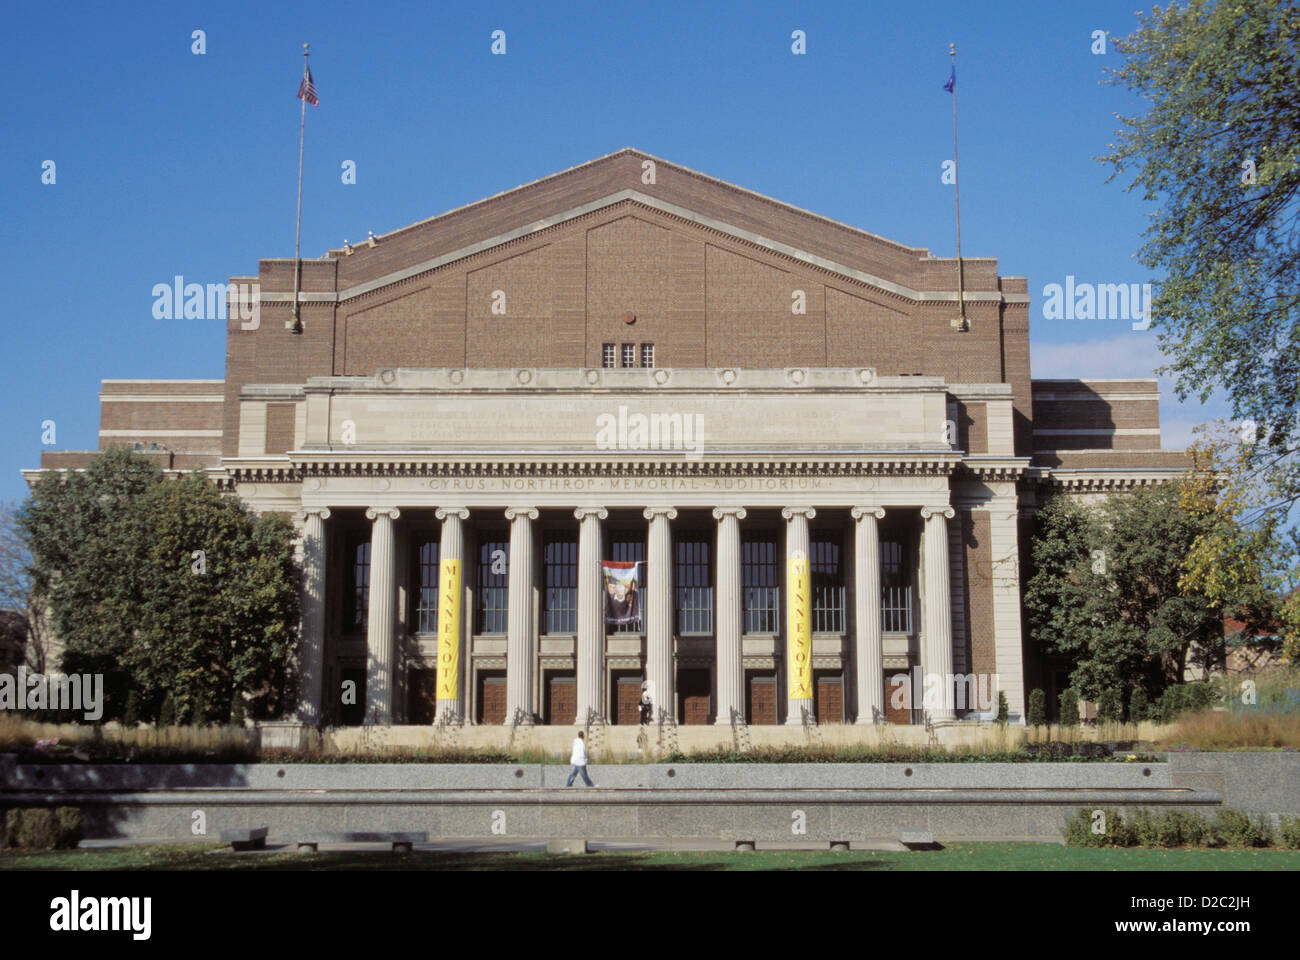 Minnesota. Minneapolis. Campus der Universität von Minnesota. Cyrus Northrop Memorial Auditorium. Stockfoto